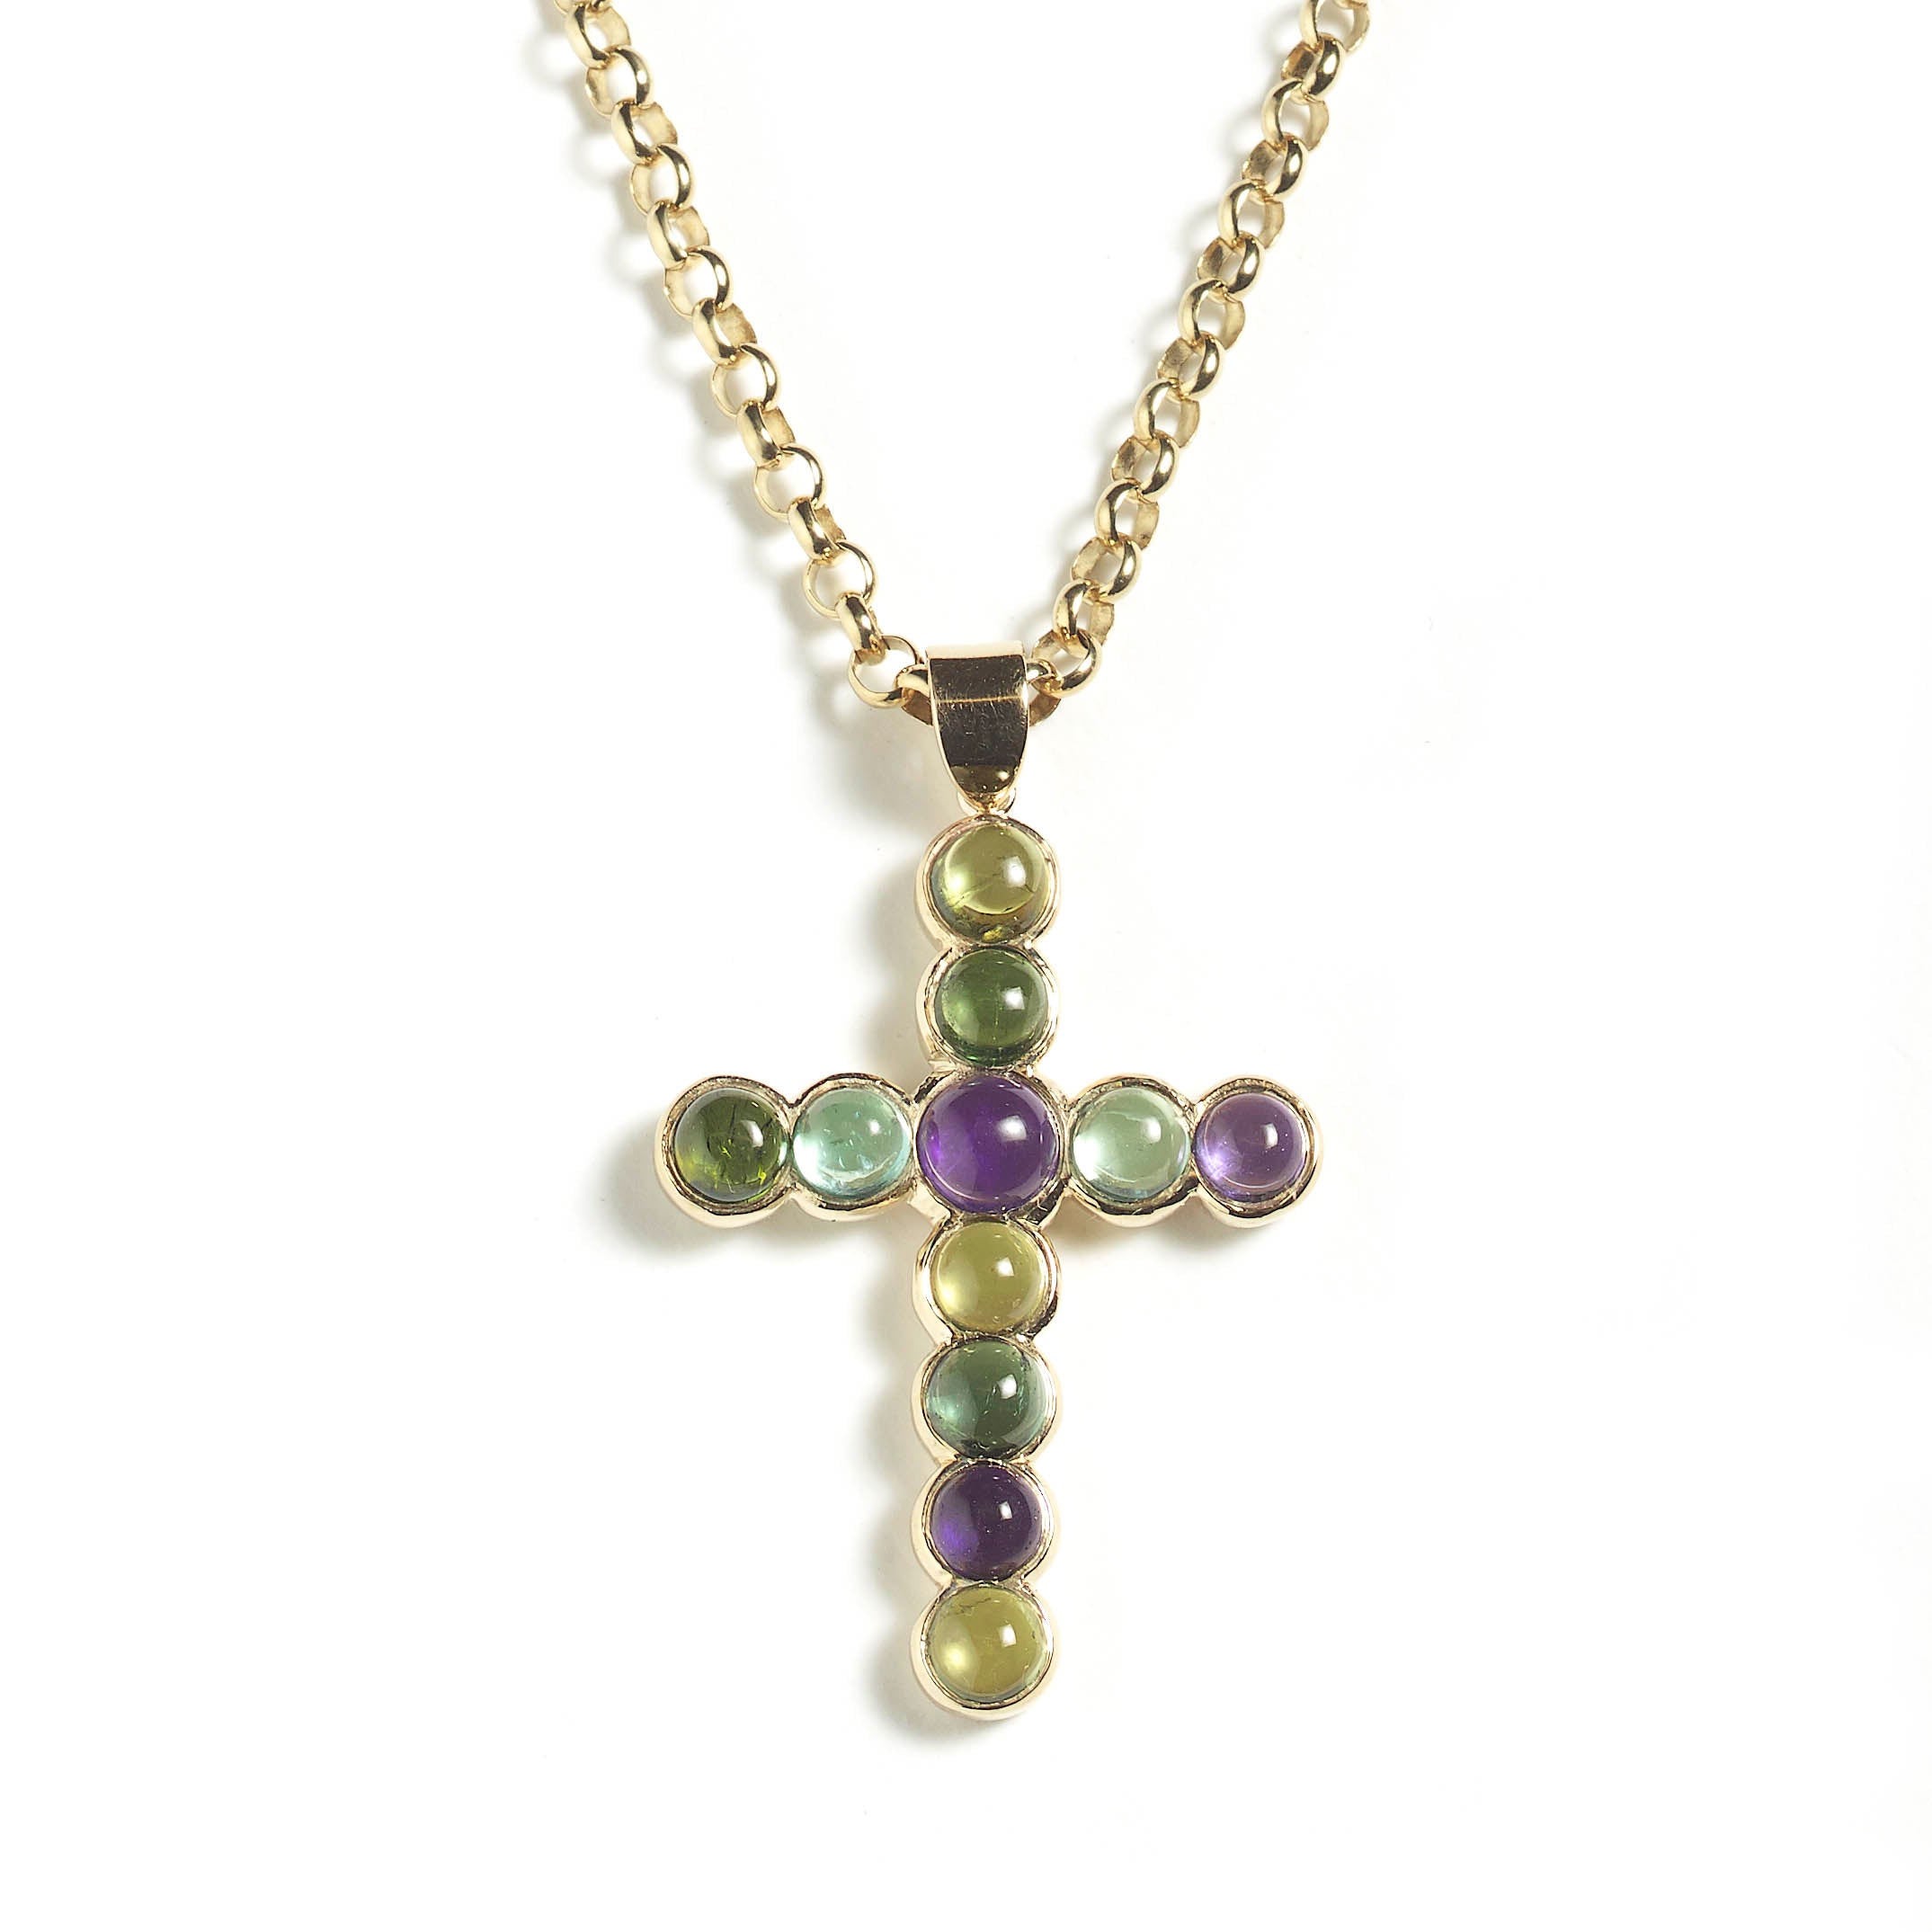 Premium Quality Precious Gemstone Beads Necklace - Gleam Jewels